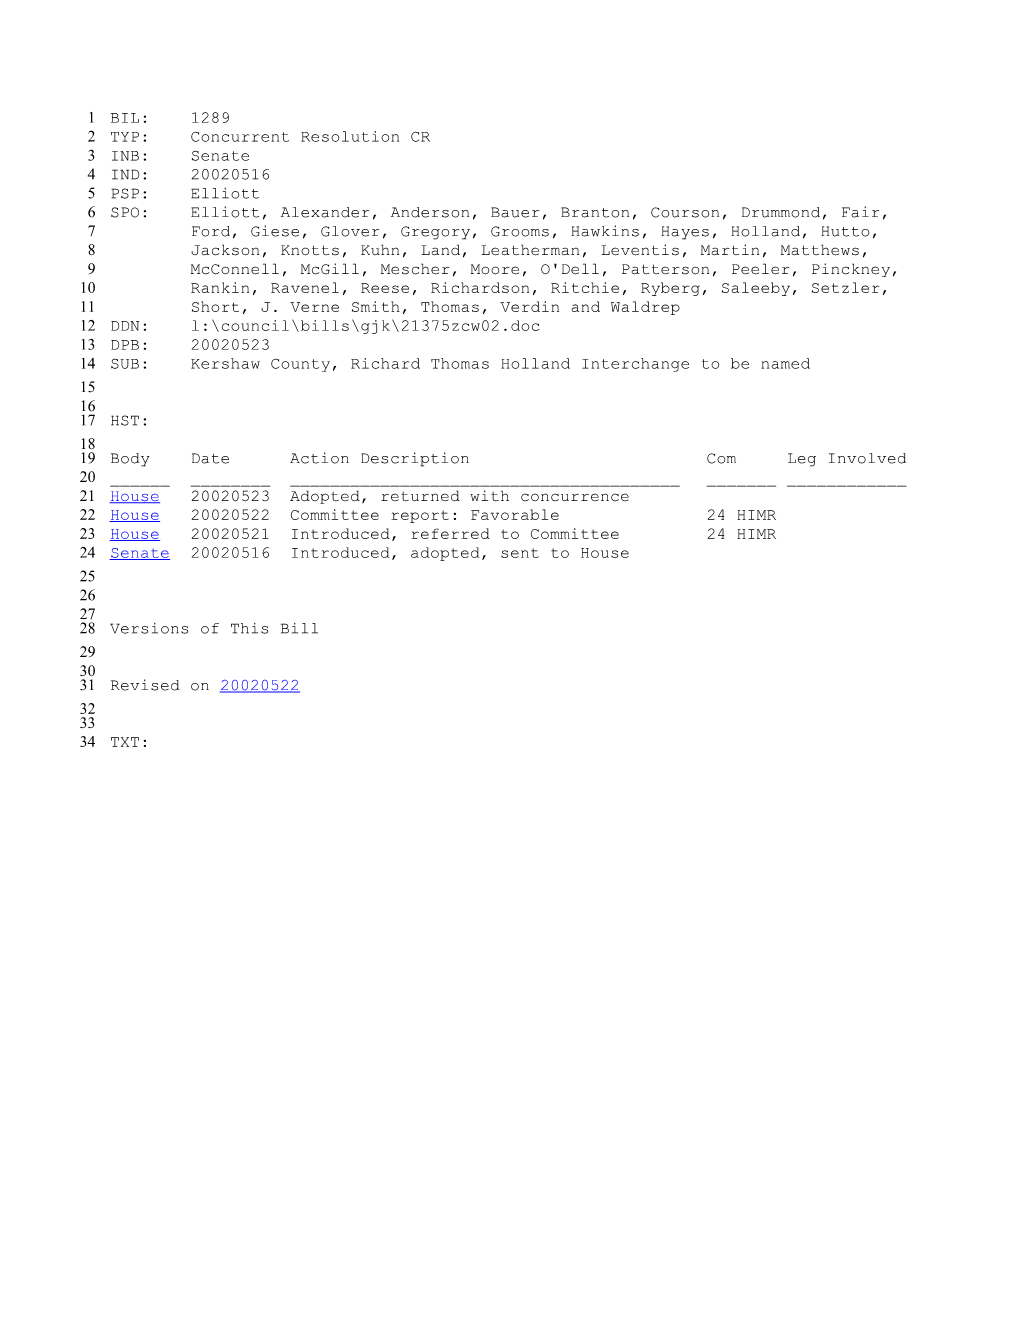 2001-2002 Bill 1289: Kershaw County, Richard Thomas Holland Interchange to Be Named - South